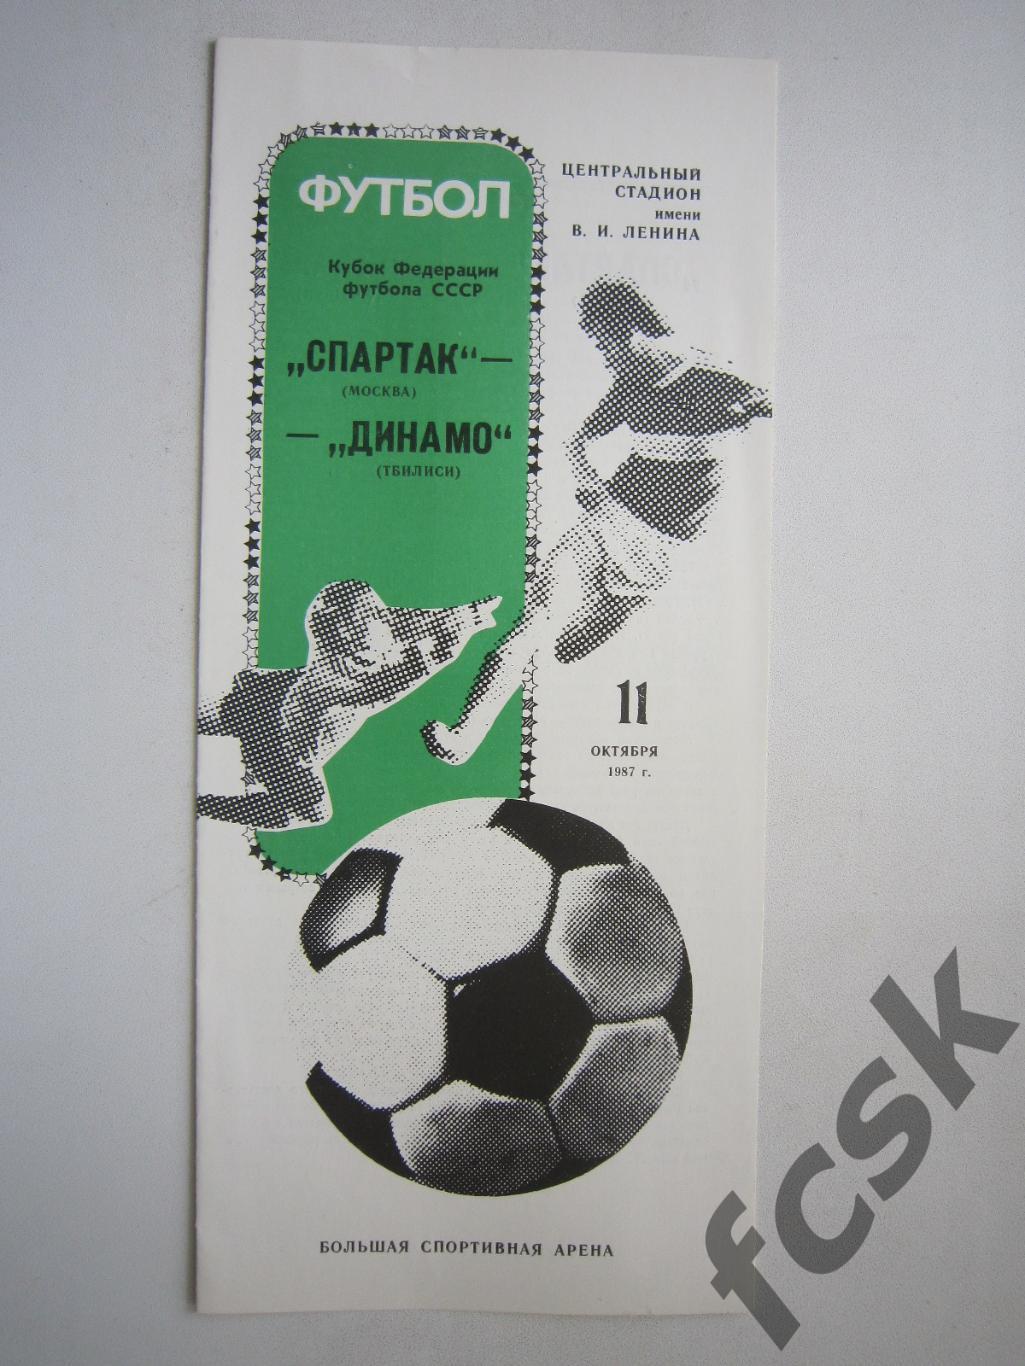 Спартак Москва - Динамо Тбилиси 1987 (ф) Кубок Федерации футбола СССР